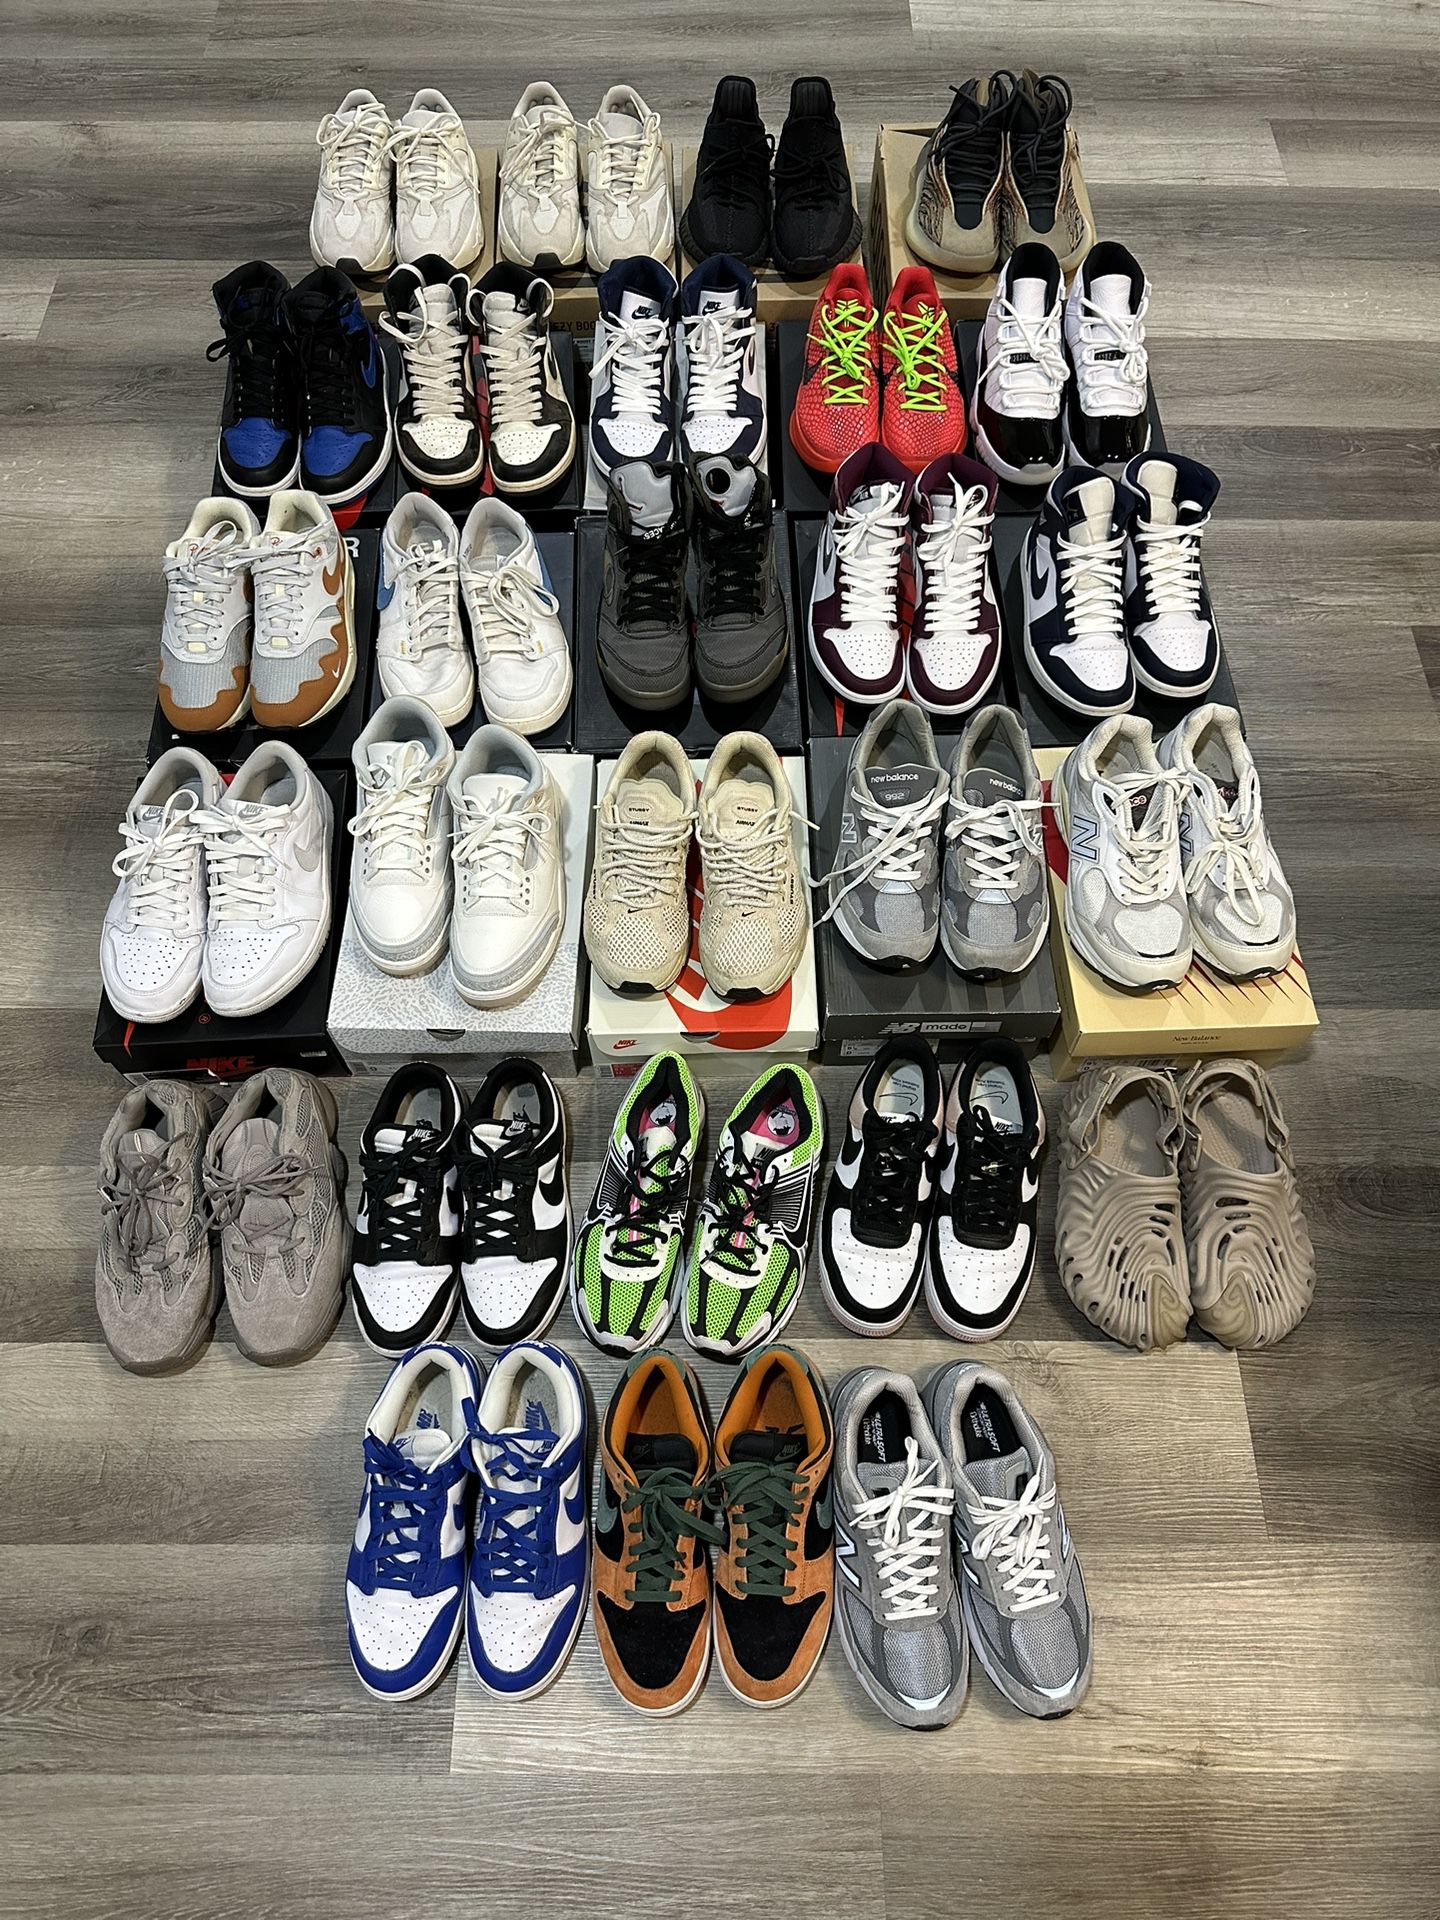 Jordans, Nike, New Balance sizes 9, 9.5, 10